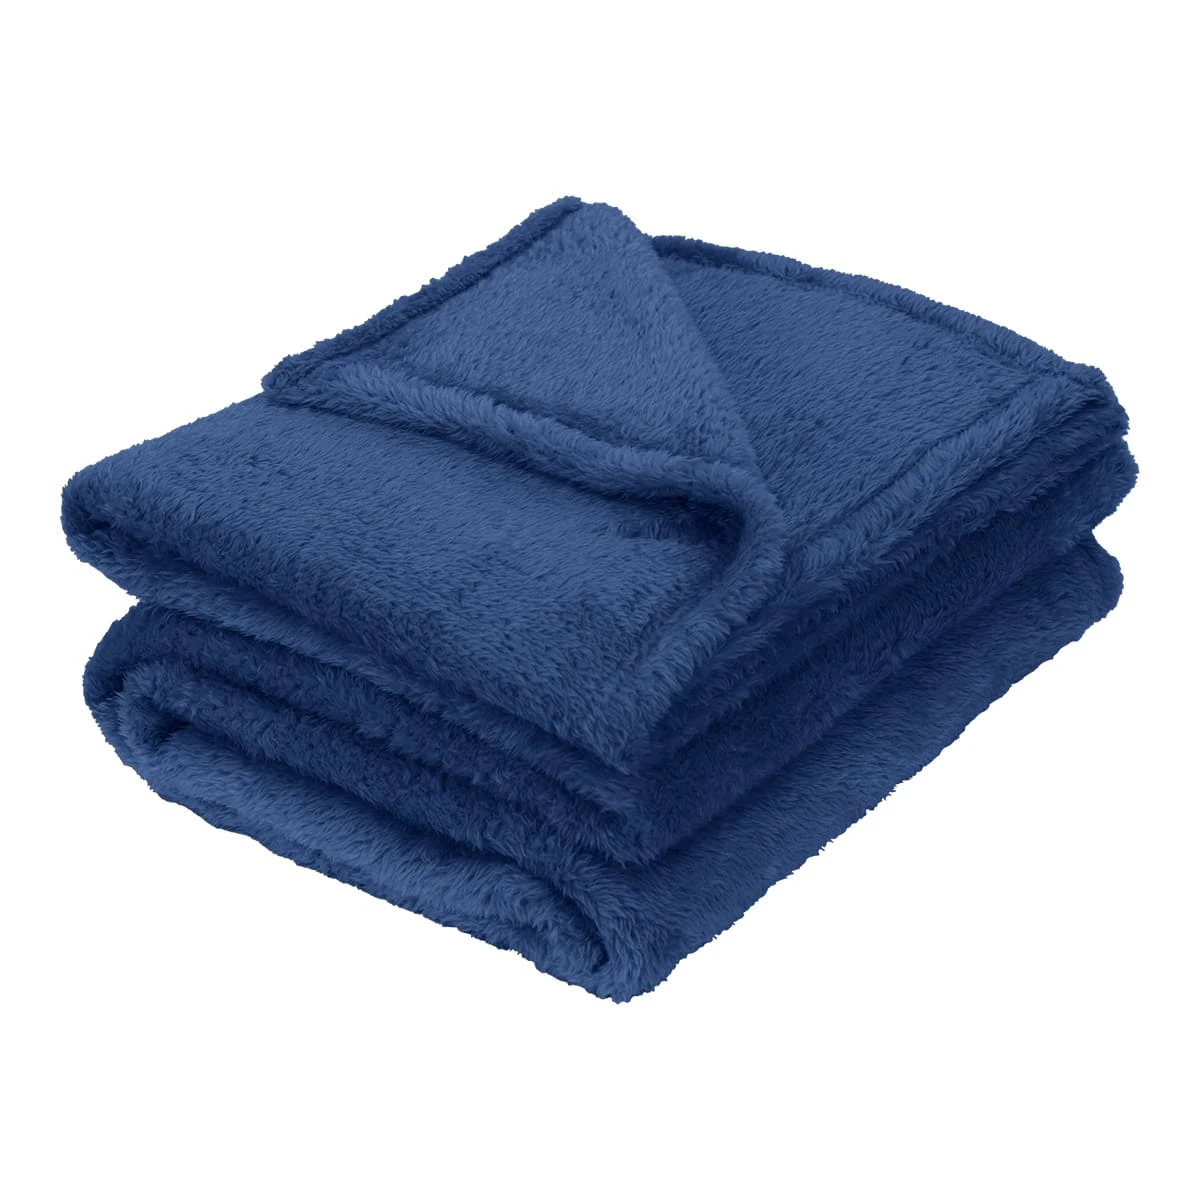 Fashion Hometex: Blanket Supplier |  Ready-to-ship Sable Plush Blanket (Royal Blue)